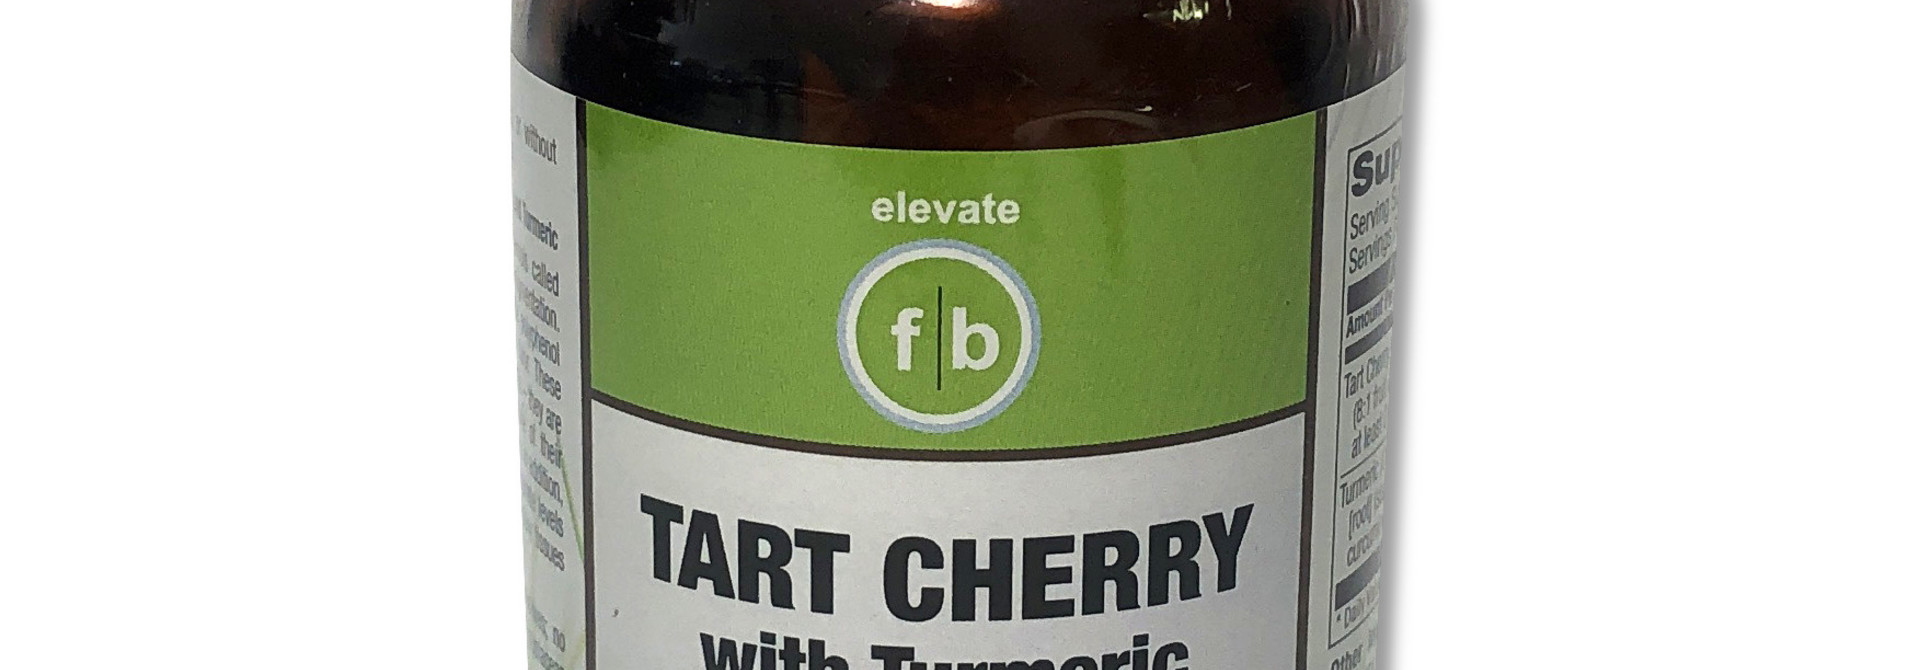 Tart Cherry with Turmeric